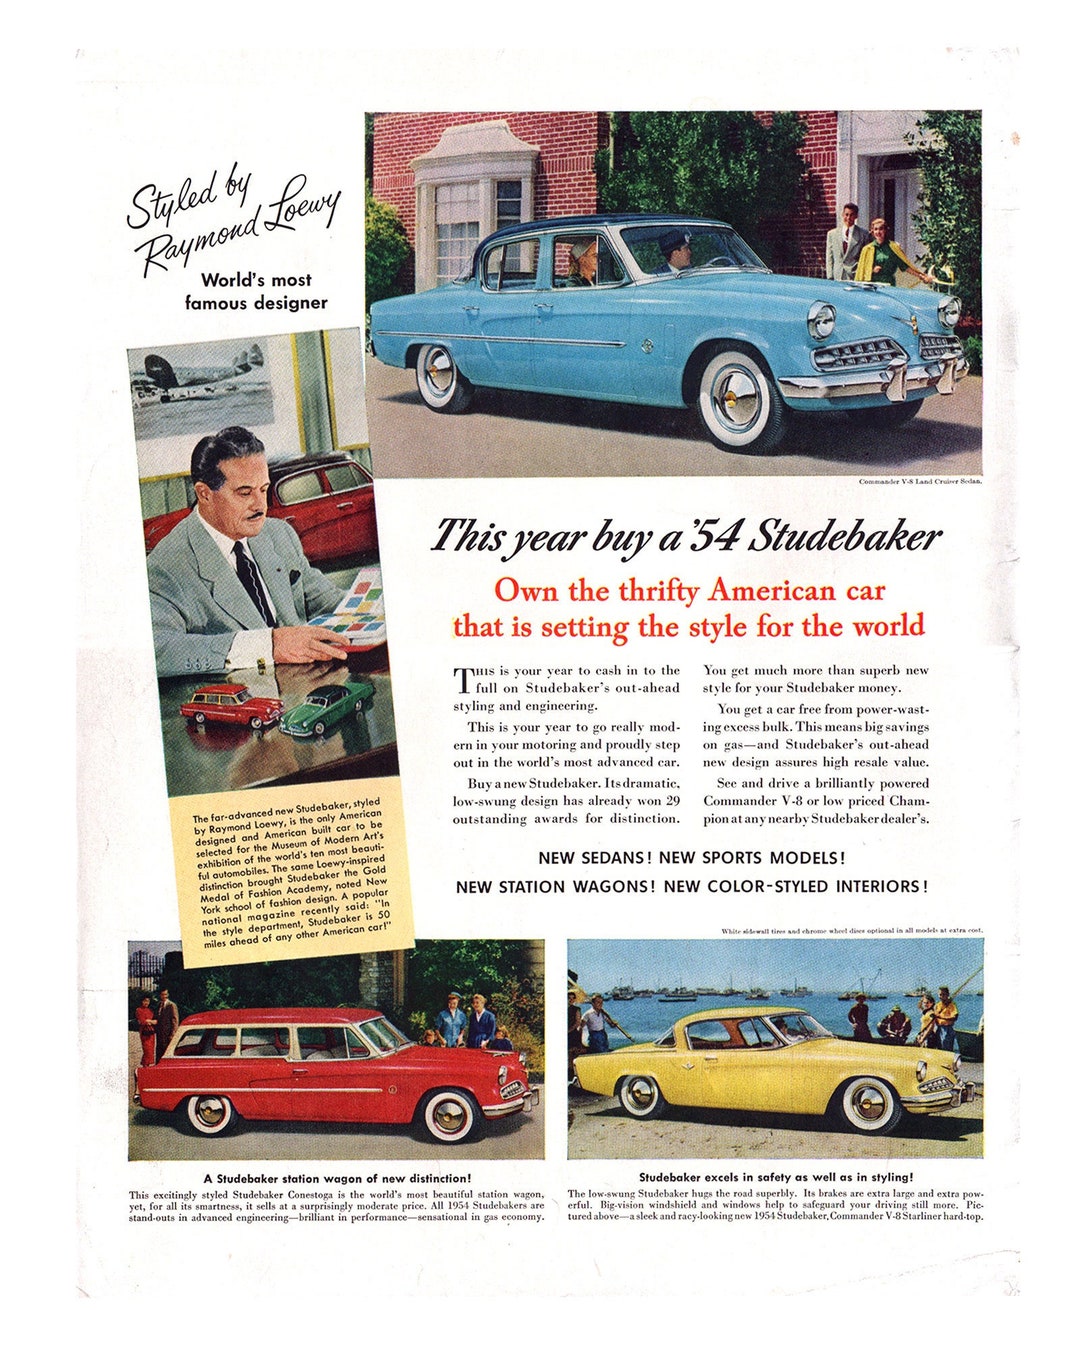 1954 Studebaker Vintage Ad, Advertising Art, Magazine Ad, Station